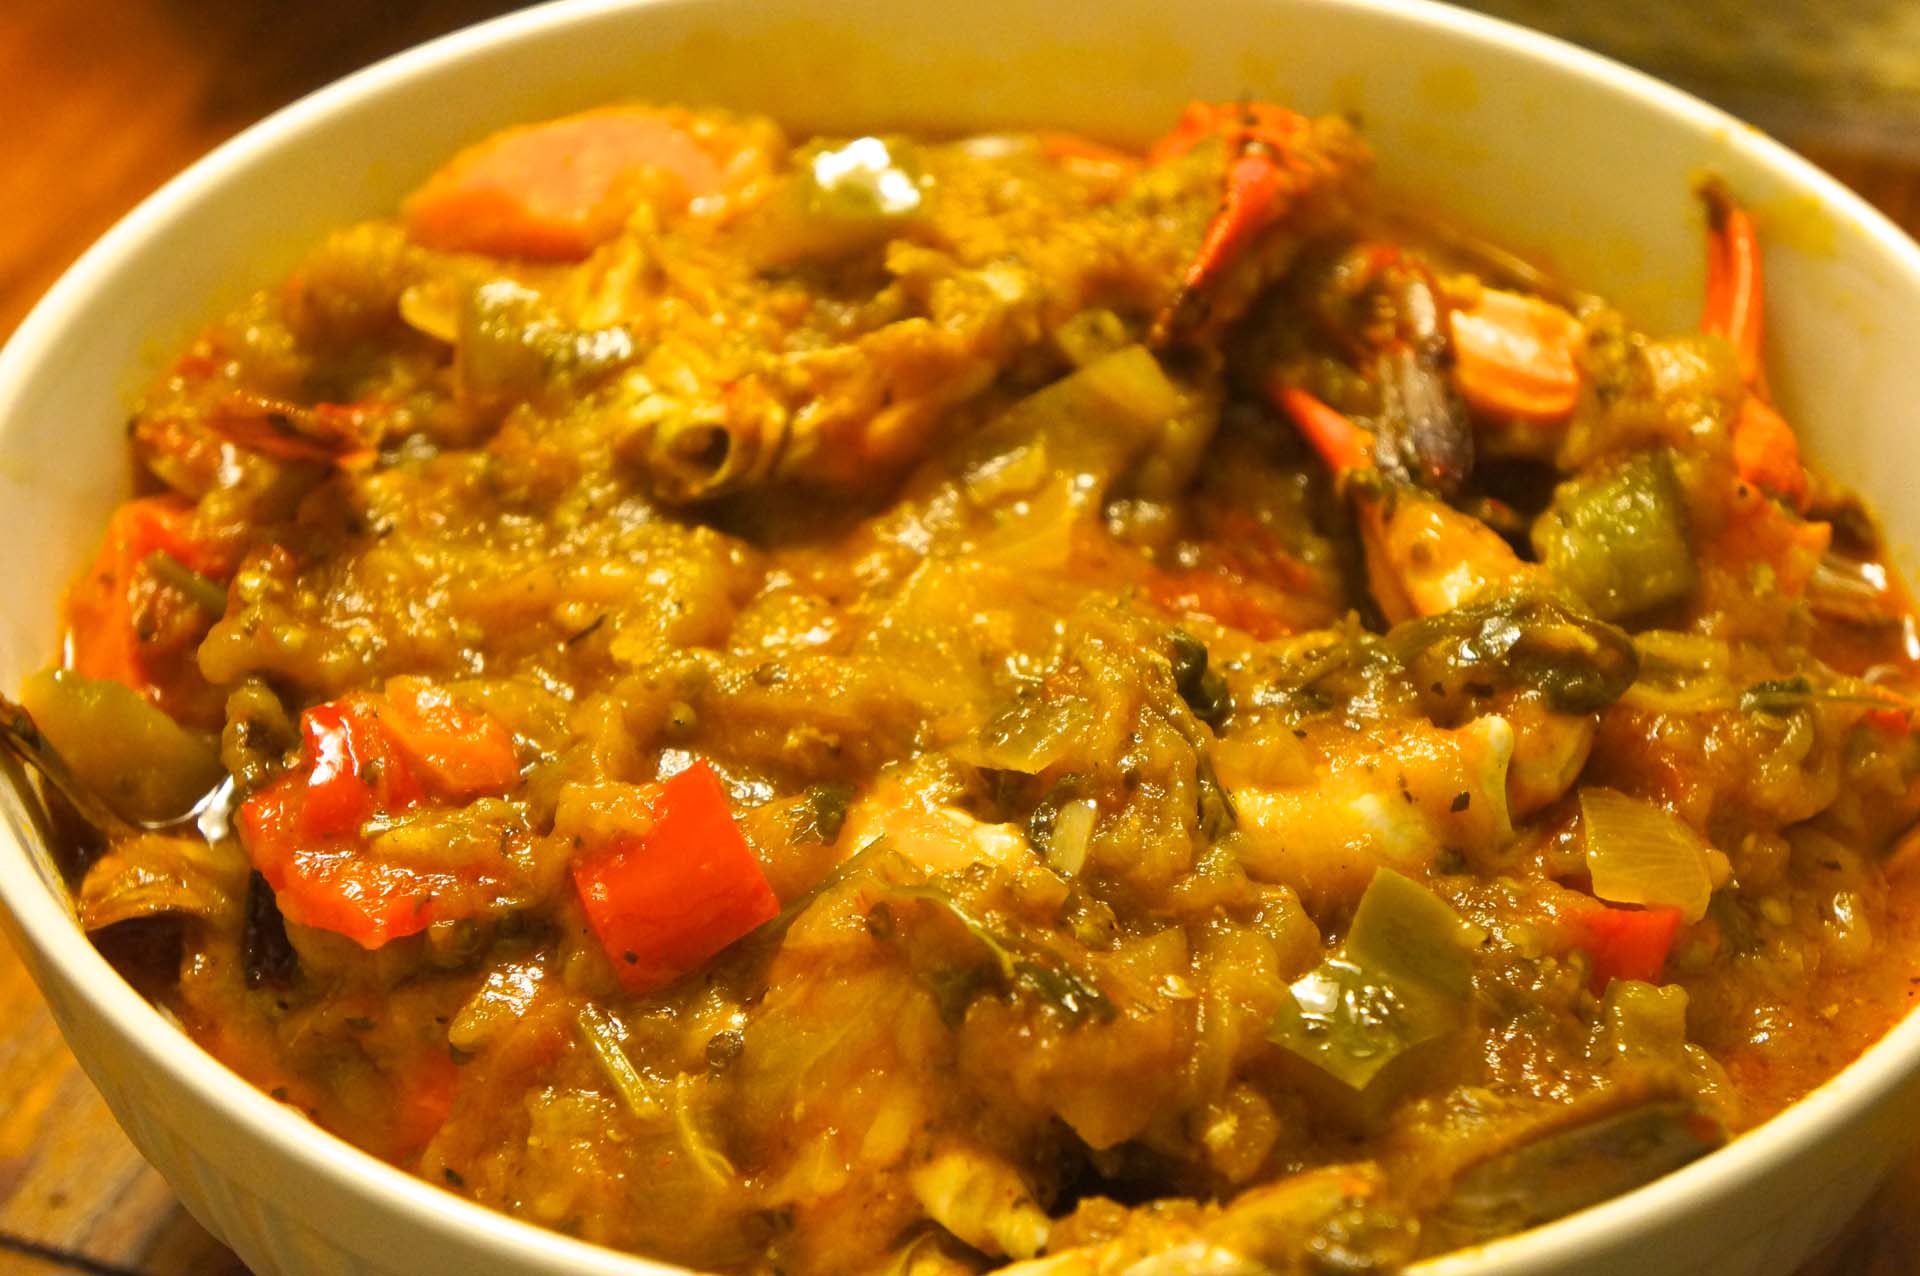 Haitian legume recipe with beef